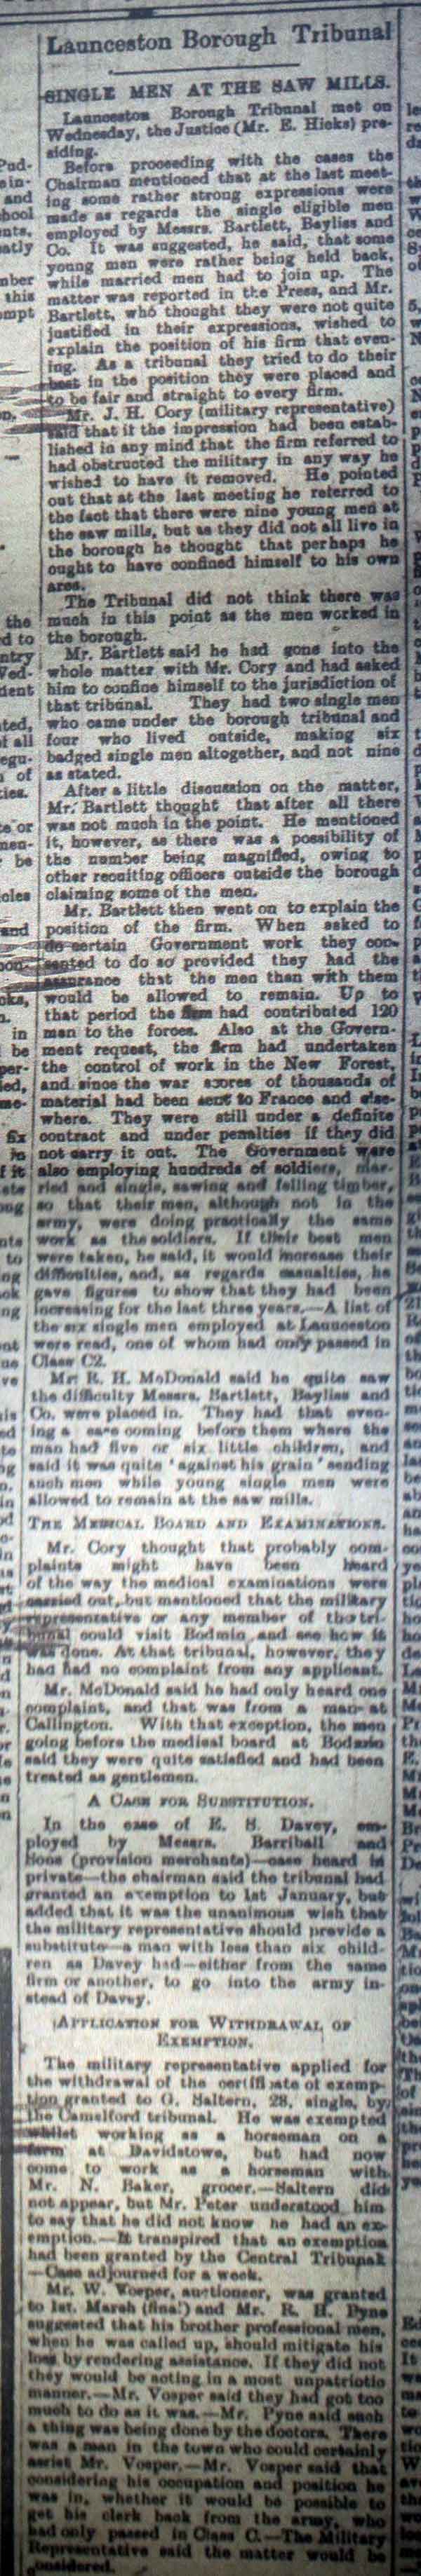 Launceston Tribunal November 11th, 1916